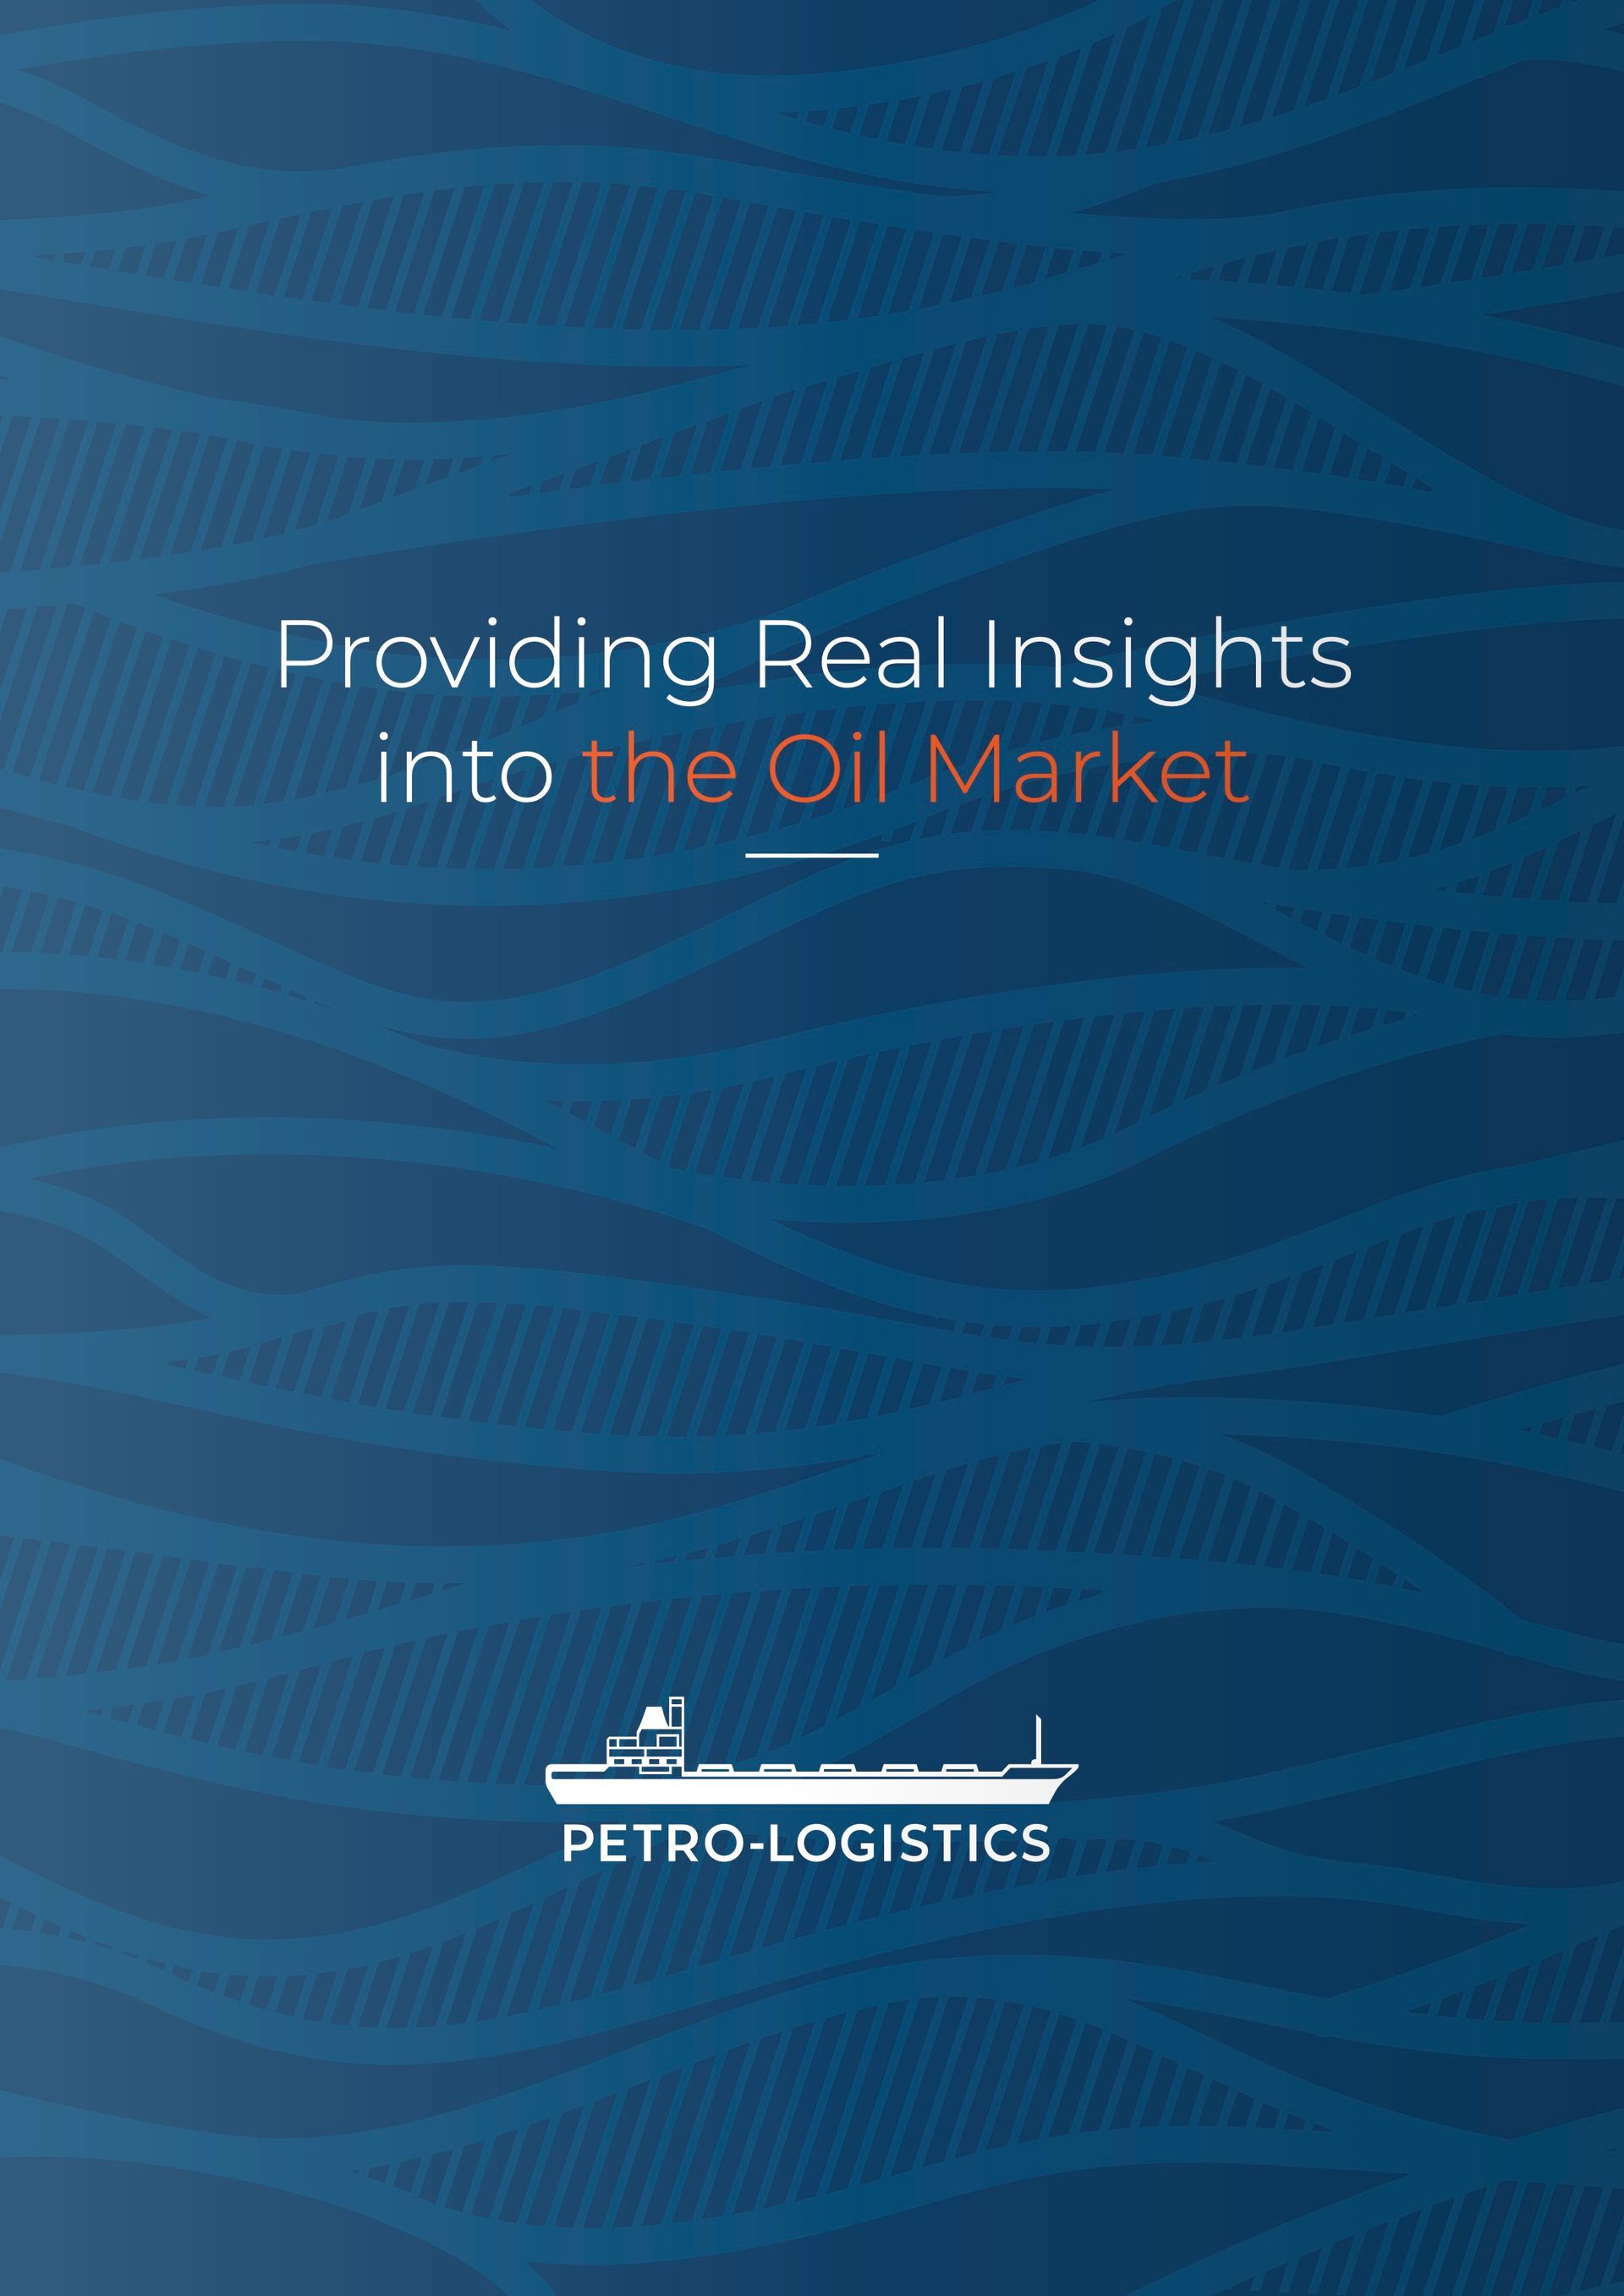 Petro-Logistics PDF magazine cover image